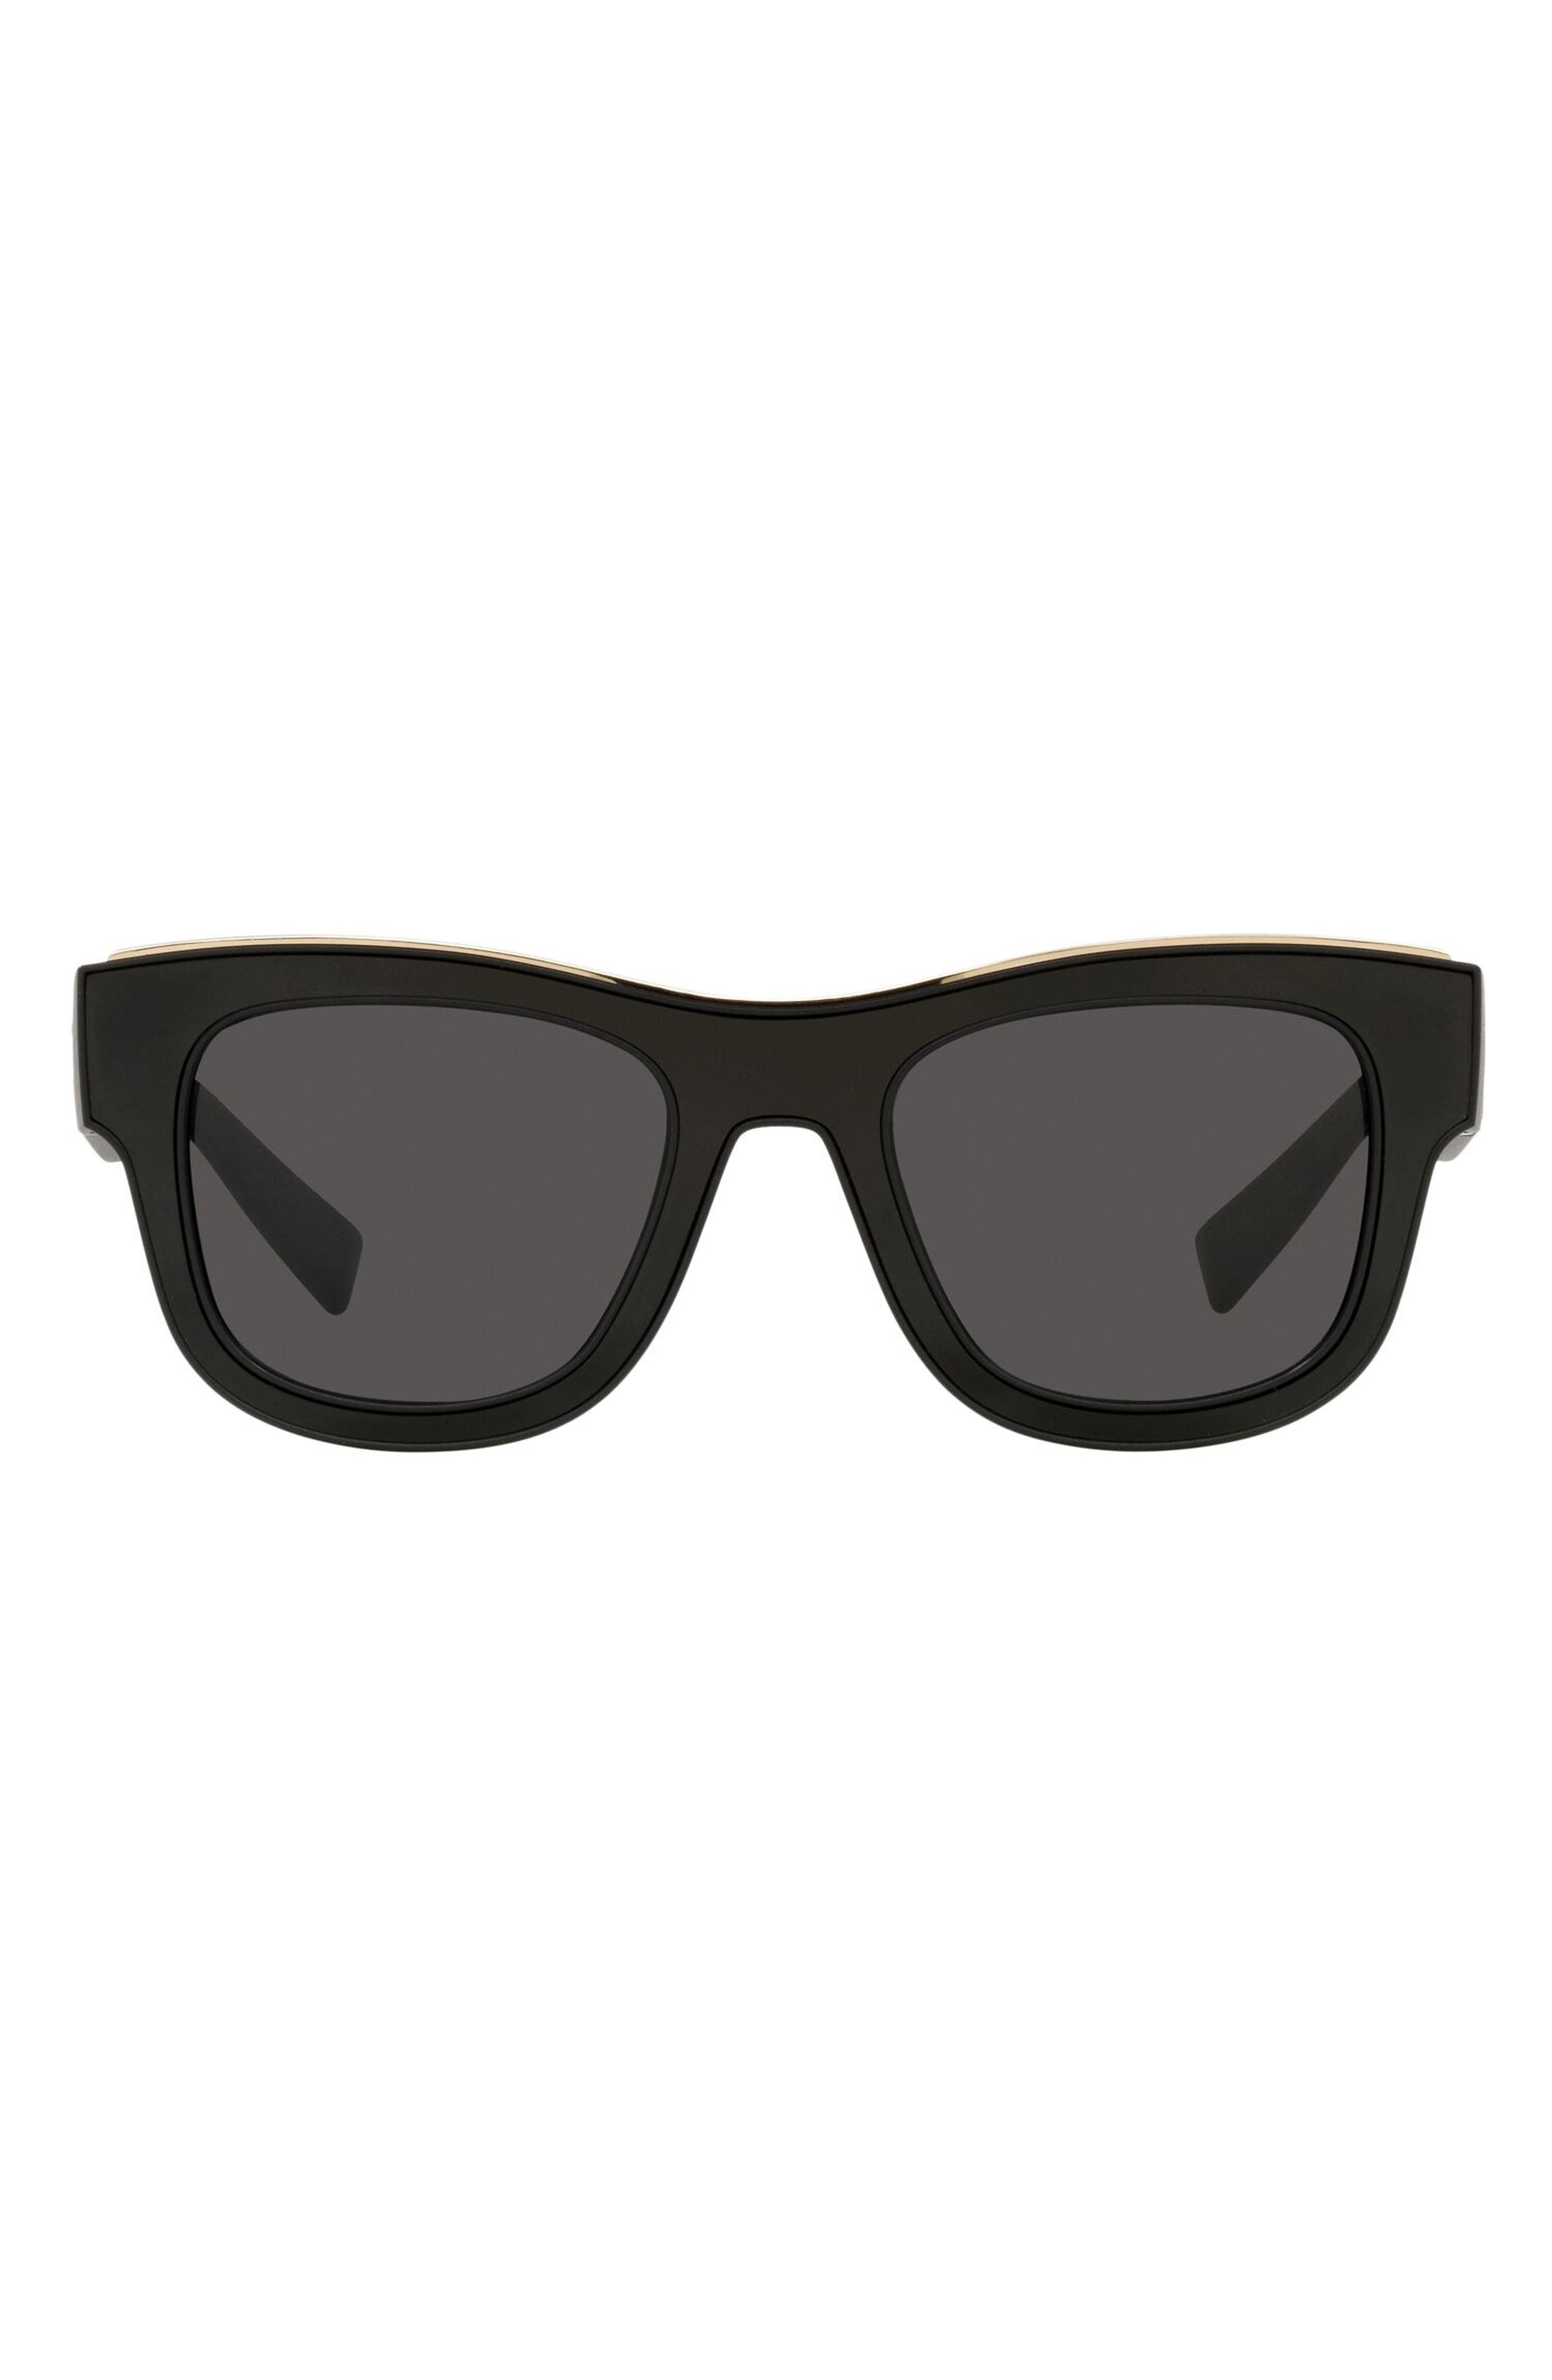 Dolce & Gabbana 54mm Square Sunglasses in Matte Black at Nordstrom